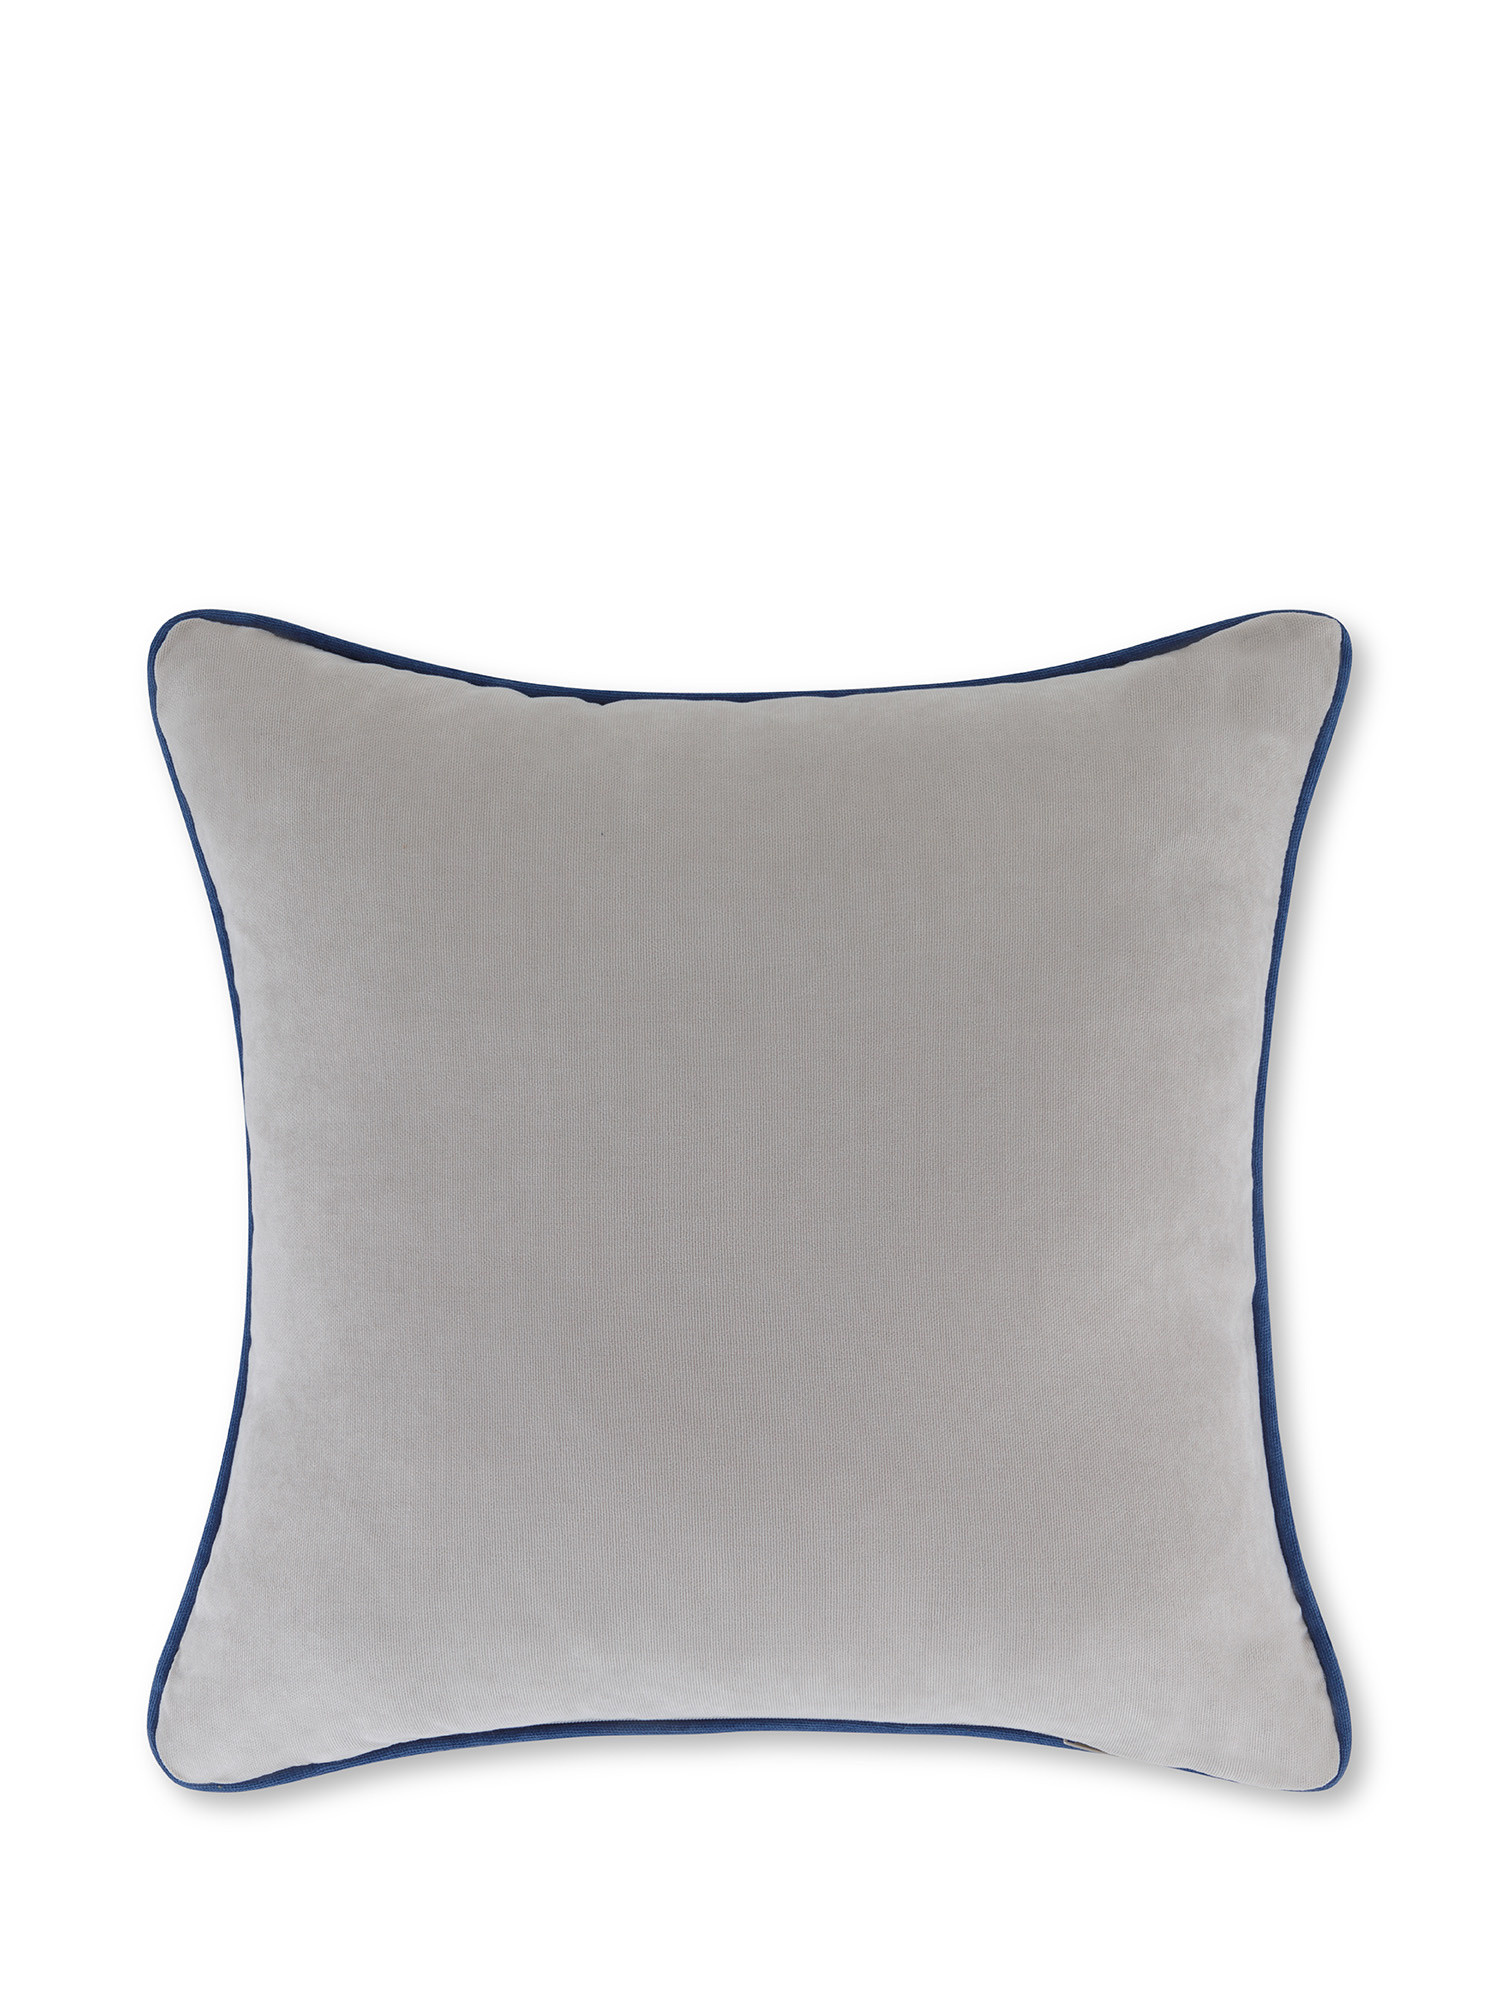 Houndstooth motif jacquard fabric cushion 45x45 cm, Light Grey, large image number 1